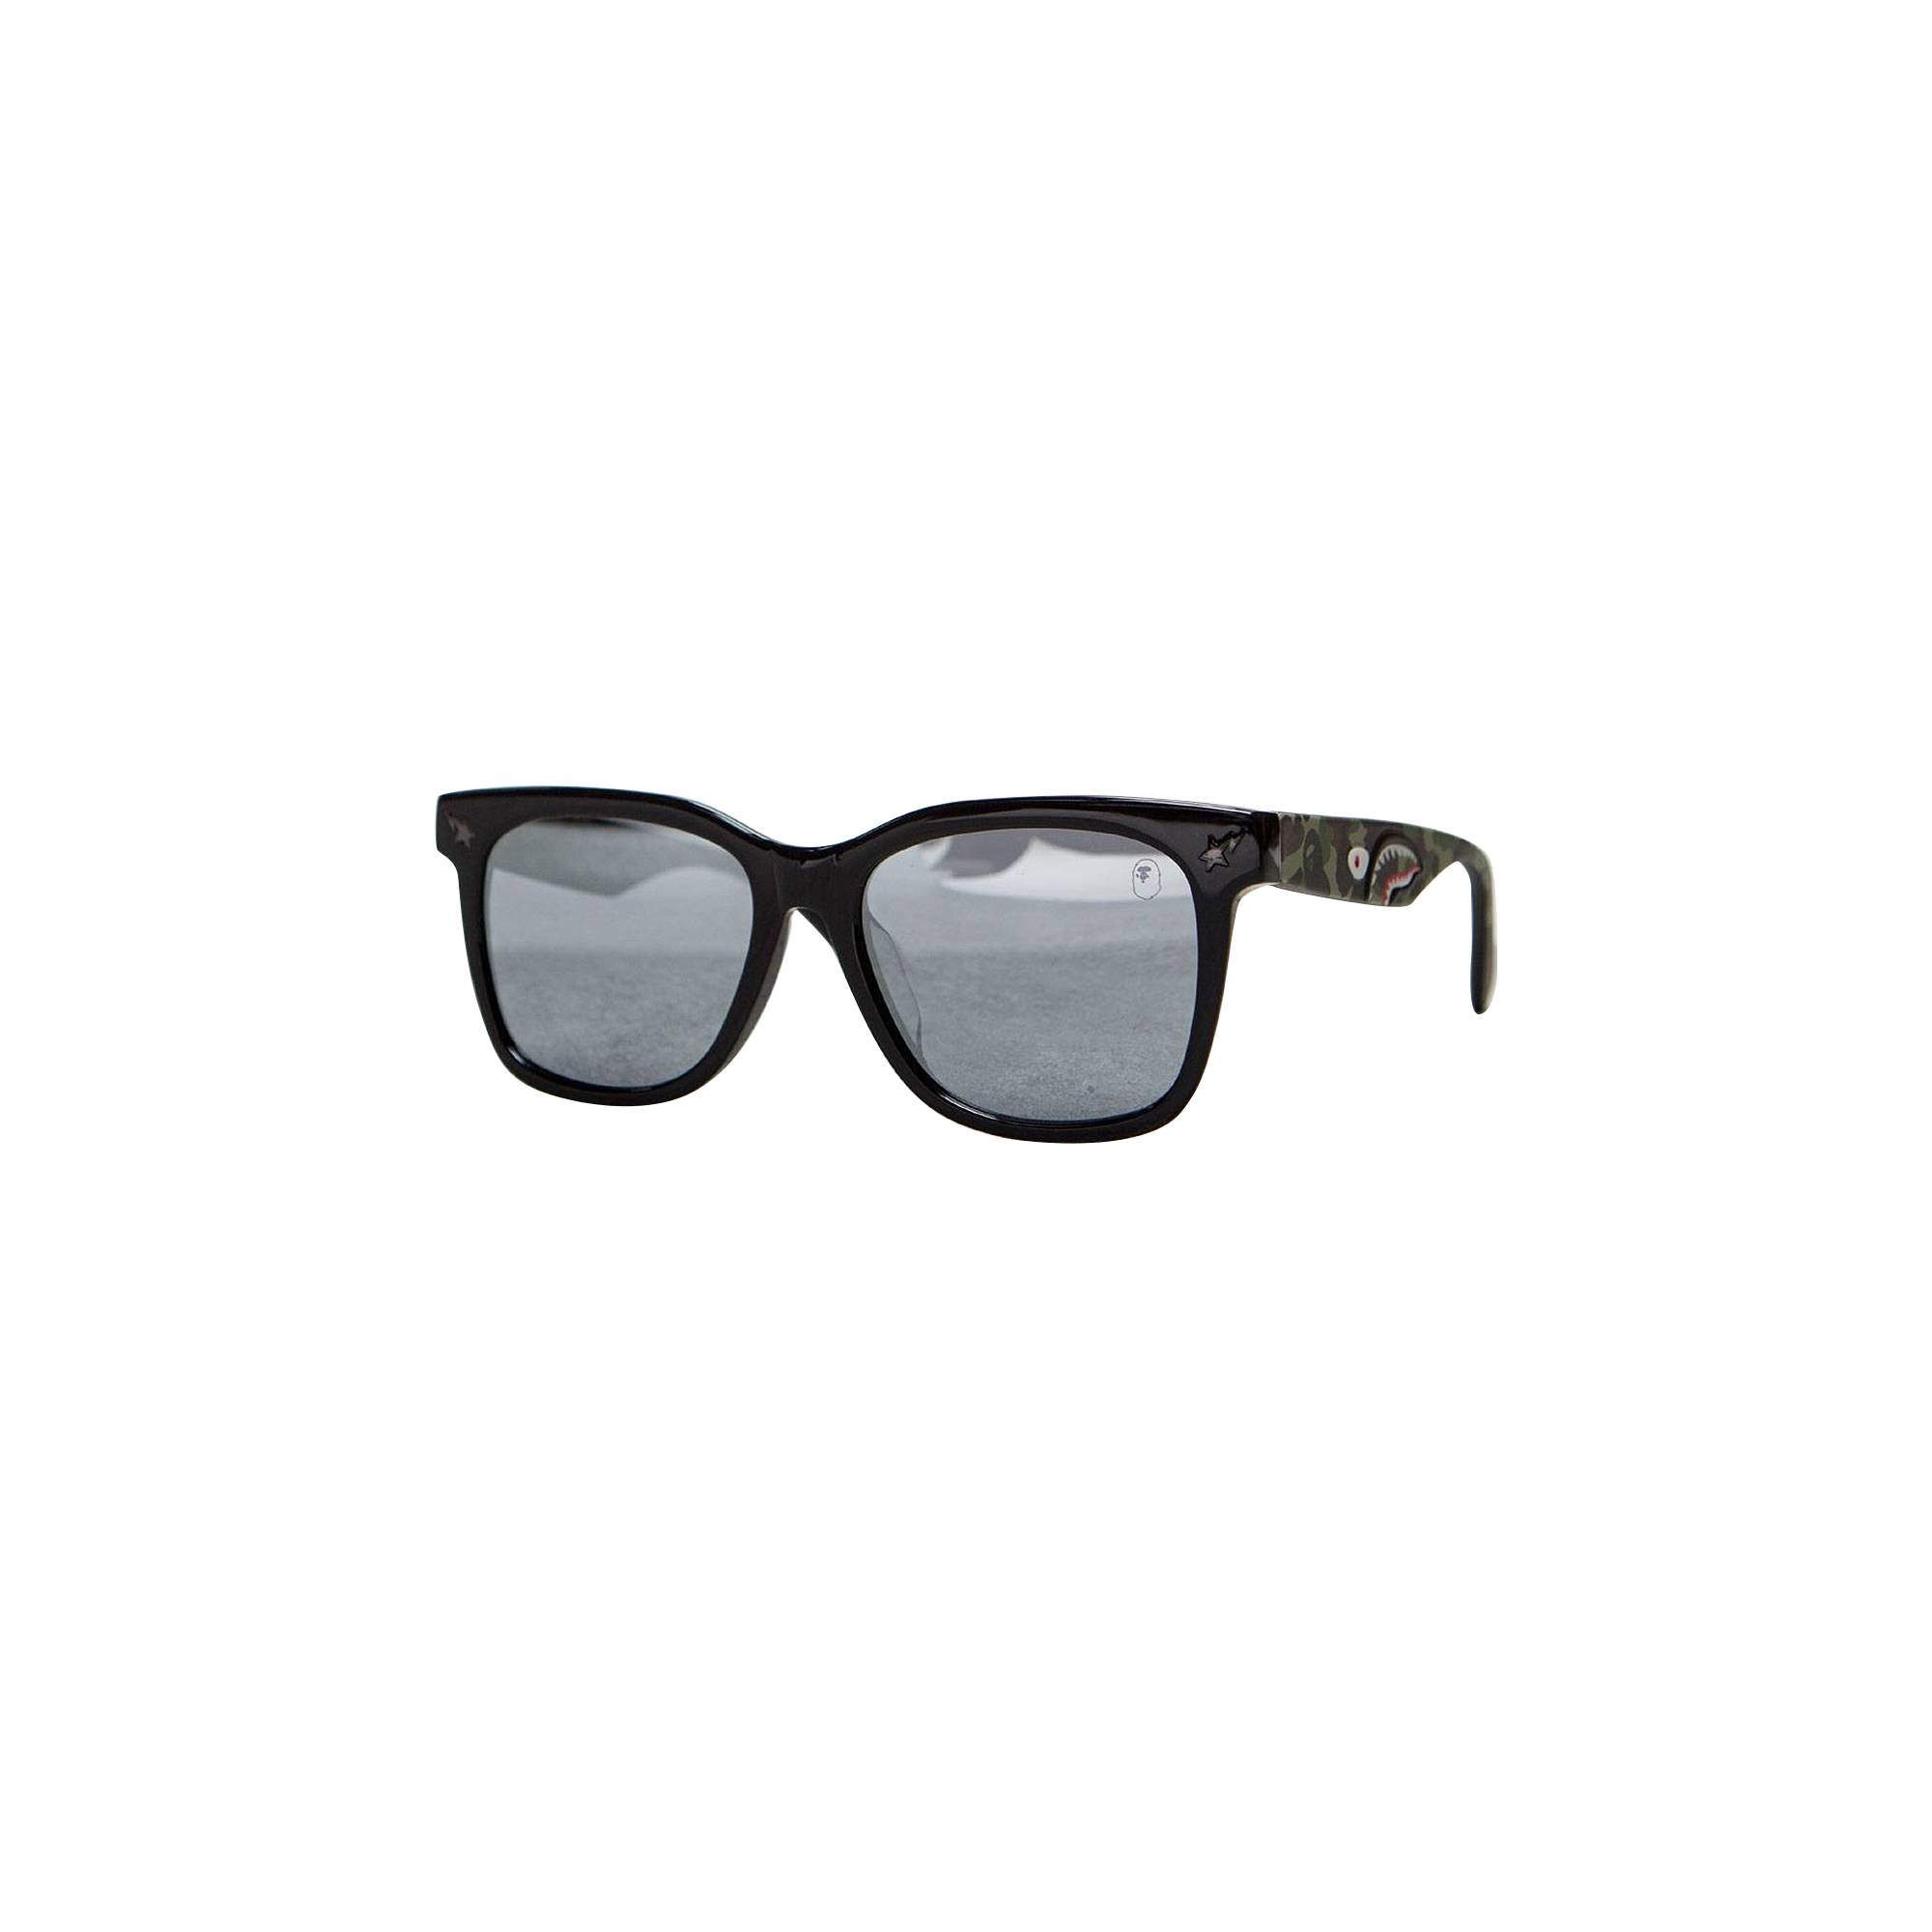 BAPE Sunglasses 'Camo' - 1